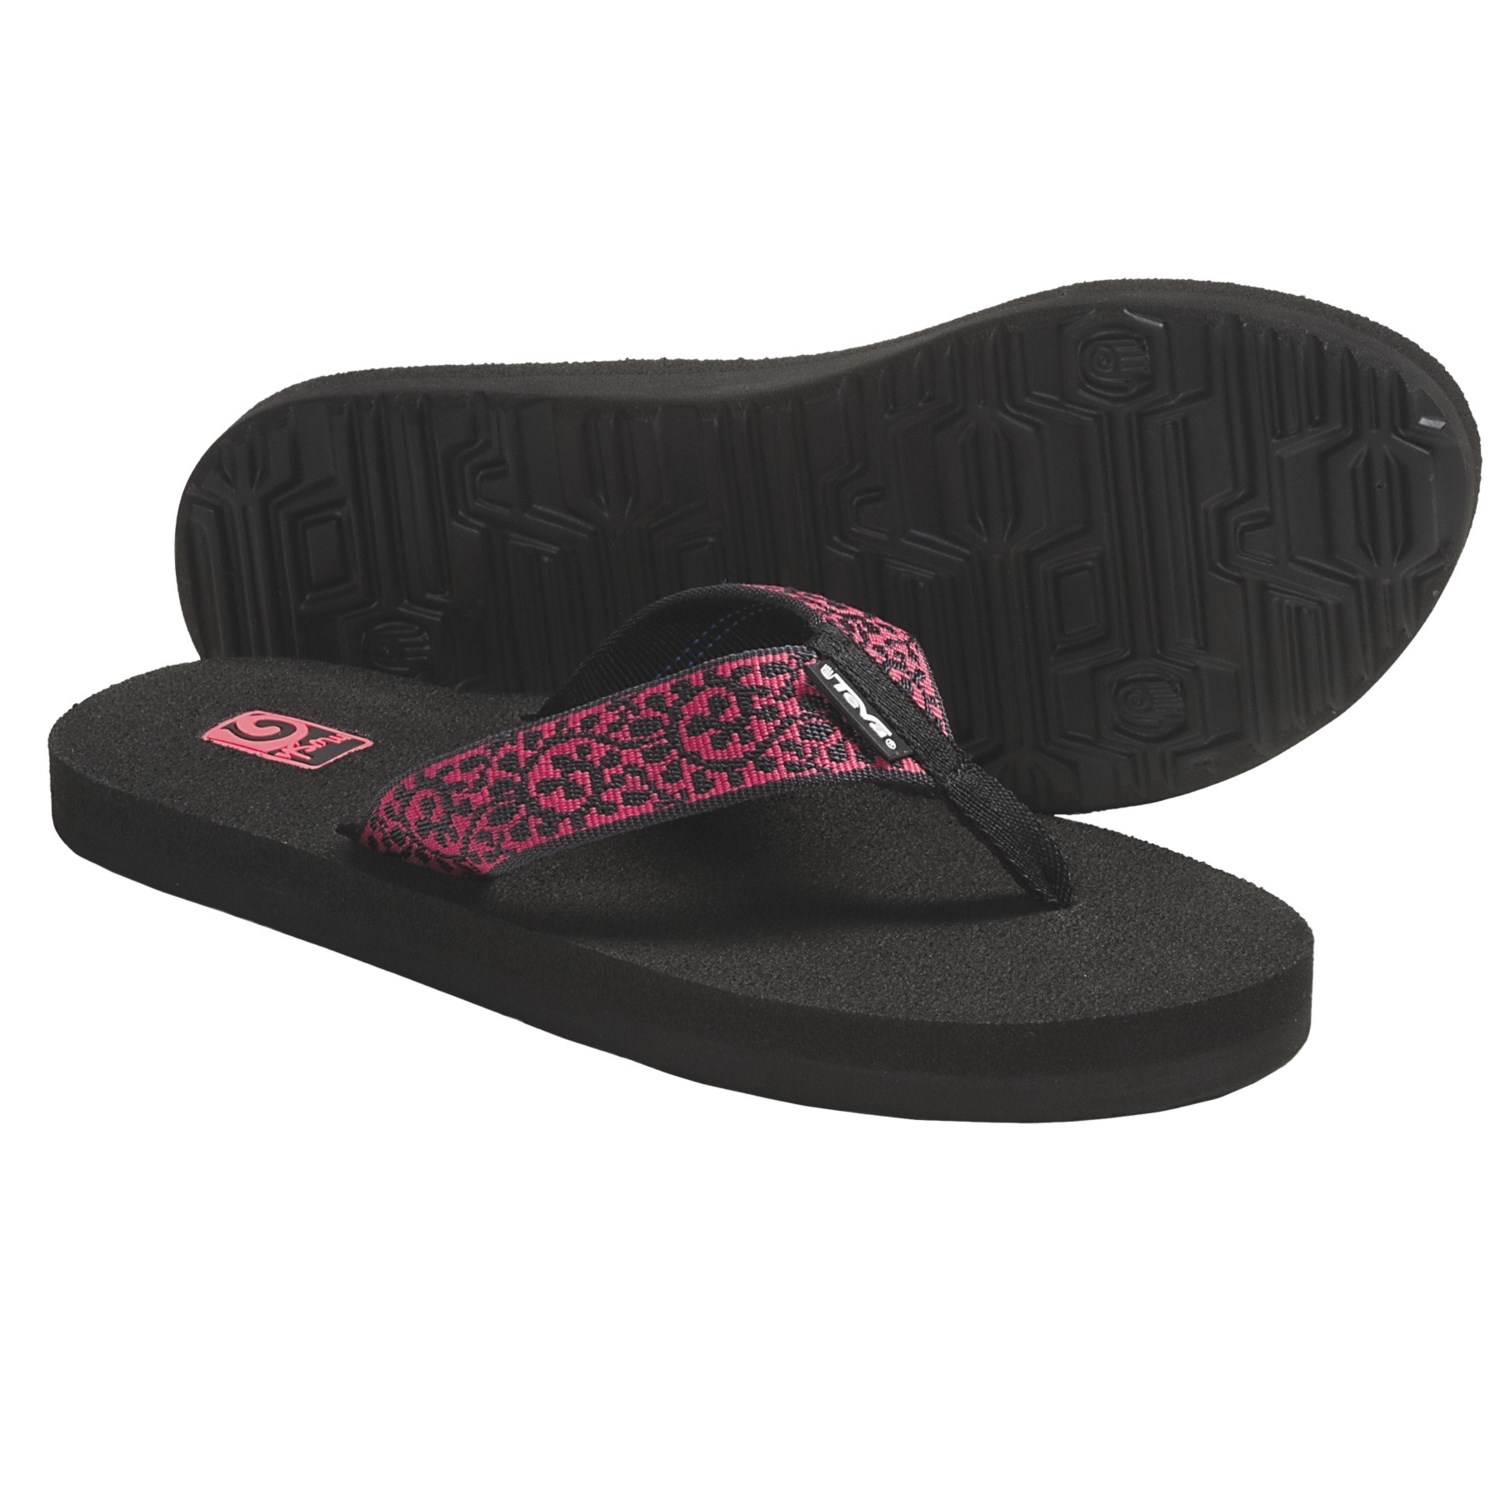 Teva Mush II Thong Sandals Flip-Flops Women's Black/Grey NWT Sizes 7-12 ...